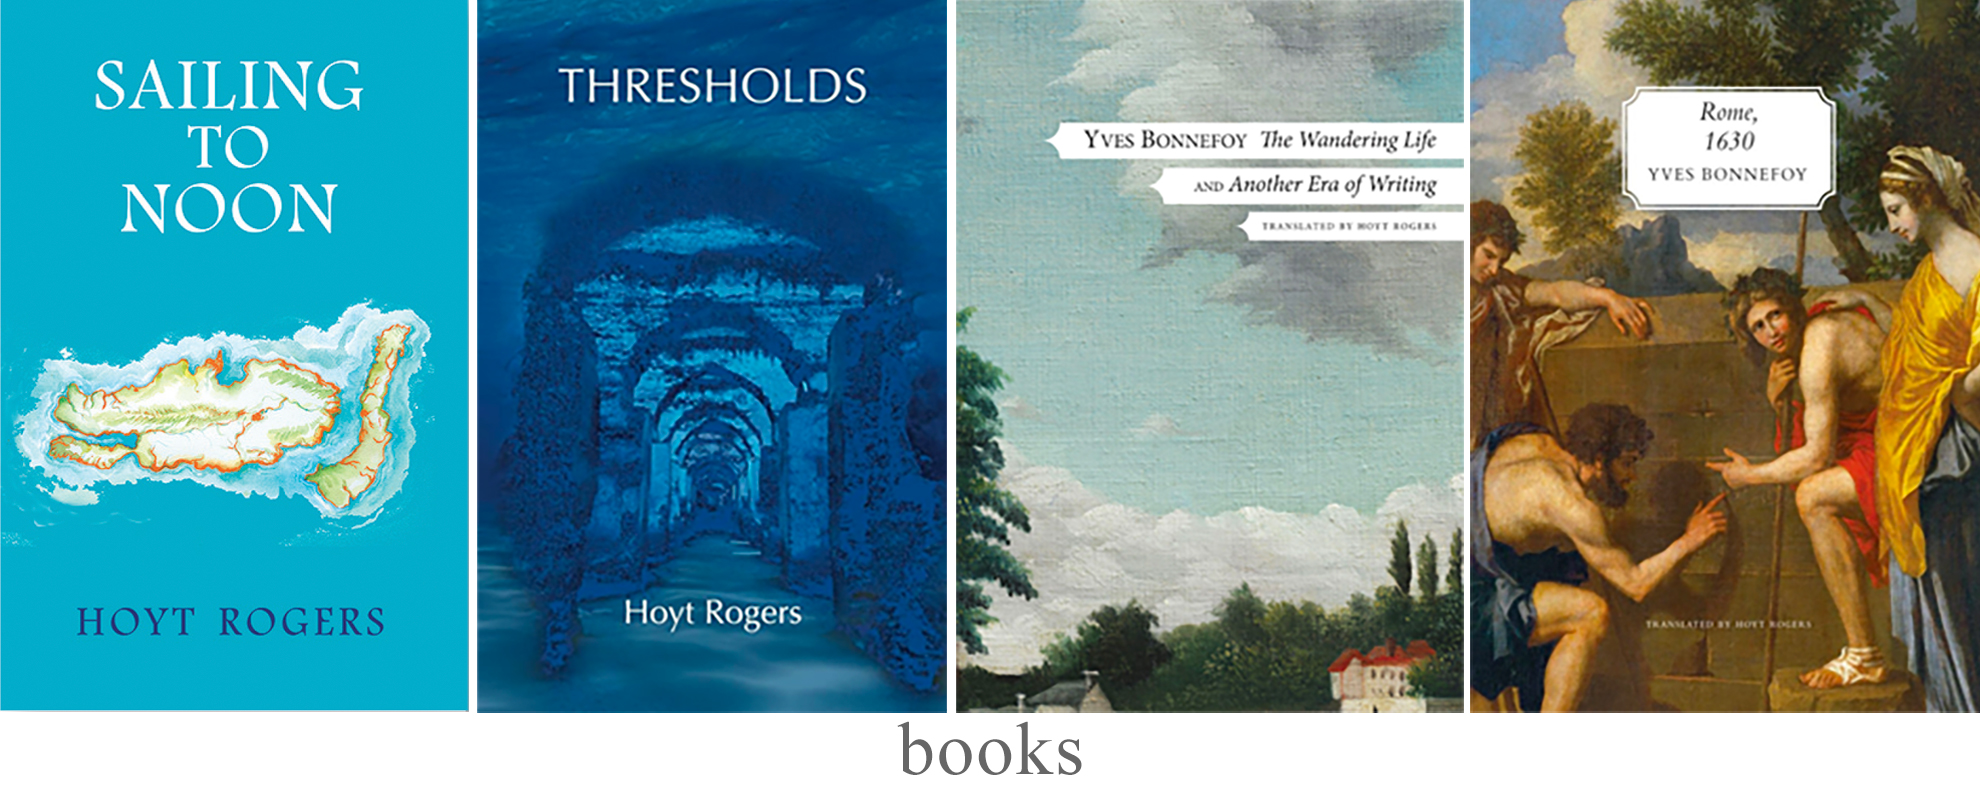 Hoyt Rogers is a writer, translator, scholar, and internationalist.